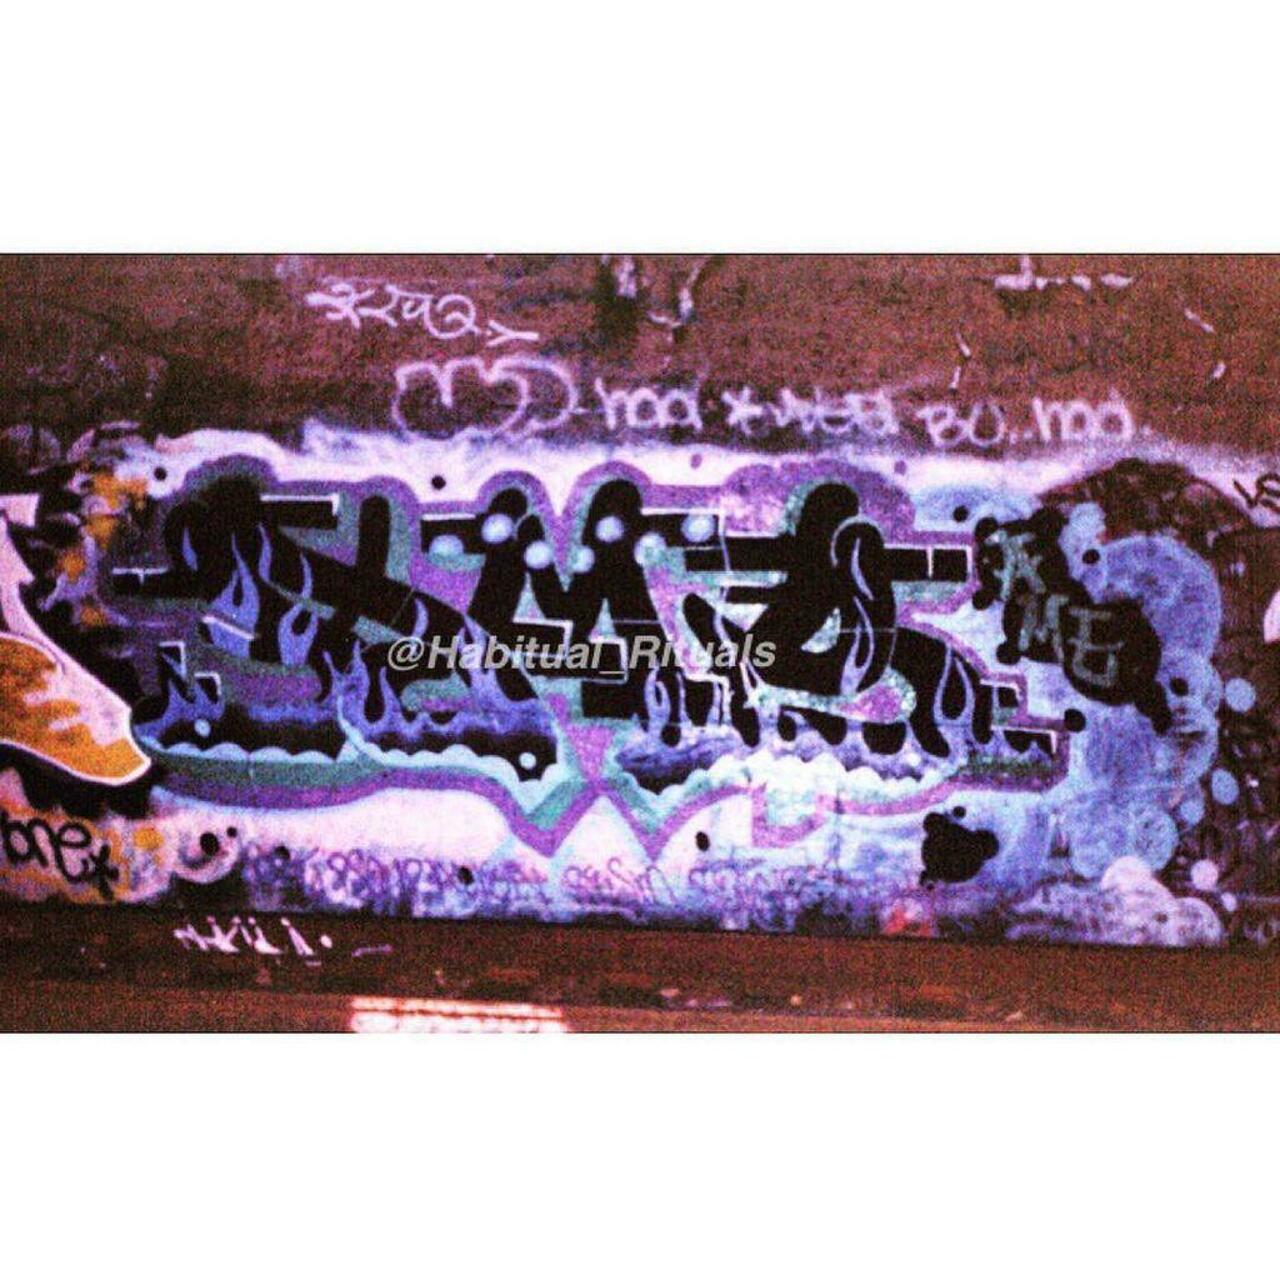 RT @artpushr: via #habitual_rituals "http://bit.ly/1VDL21X" #graffiti #streetart http://t.co/9noT0B5mK9